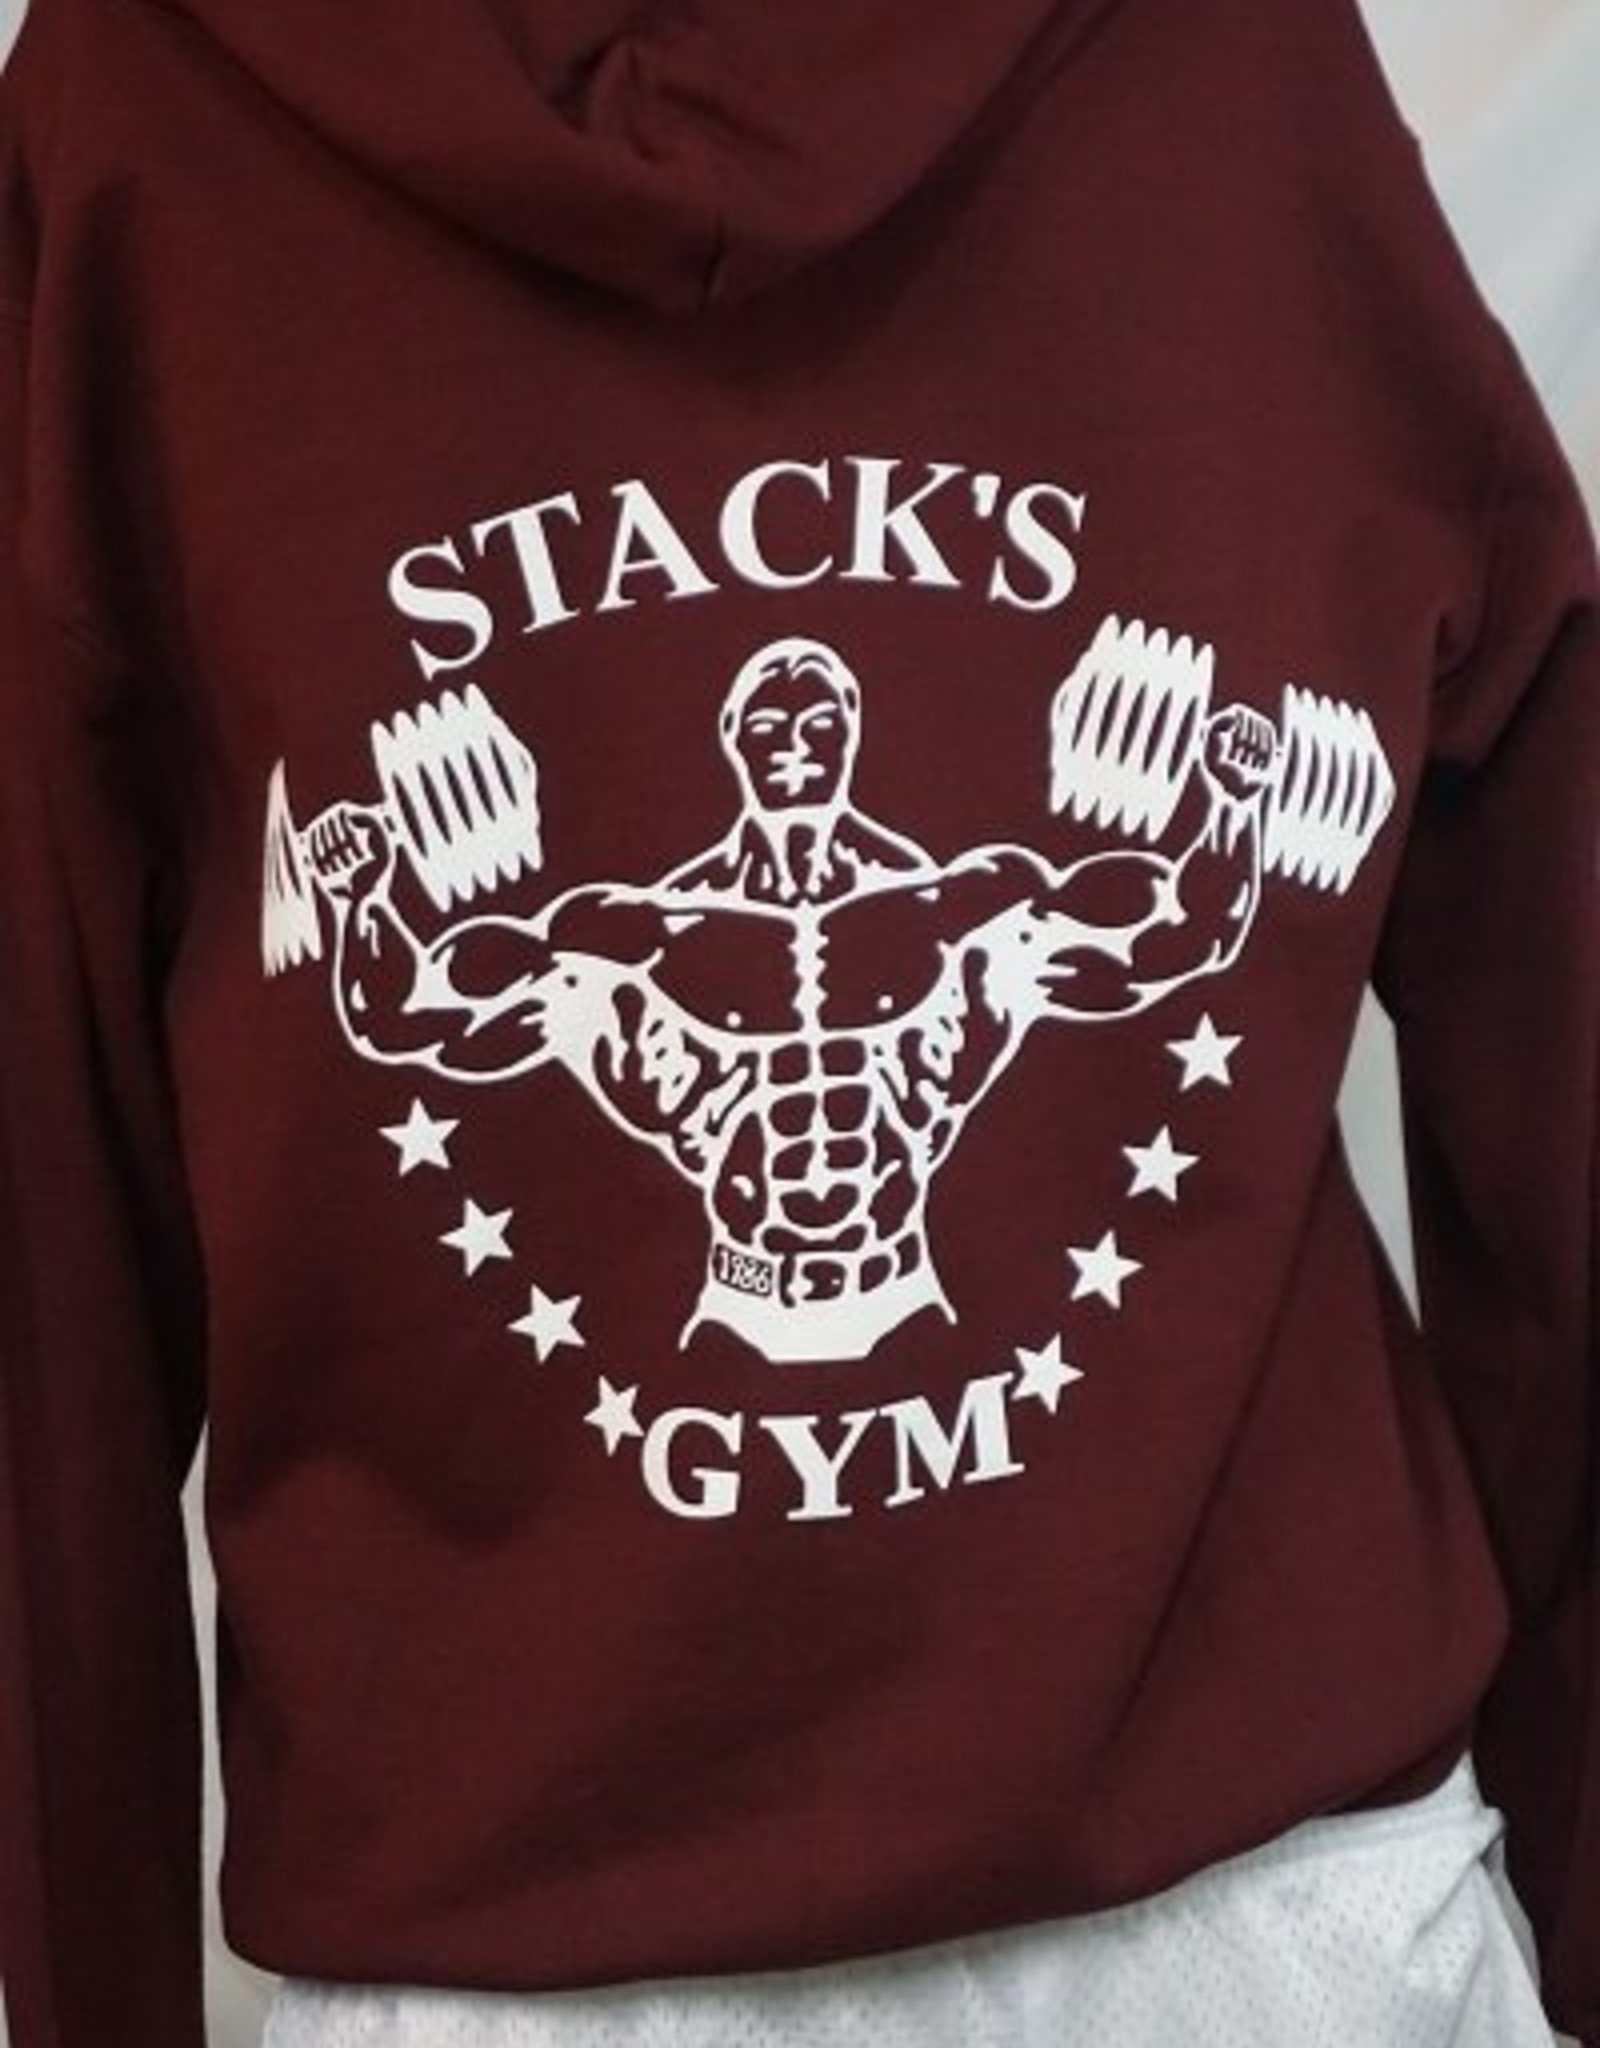 Stack's Gym Stack's Gym Freak Jacket